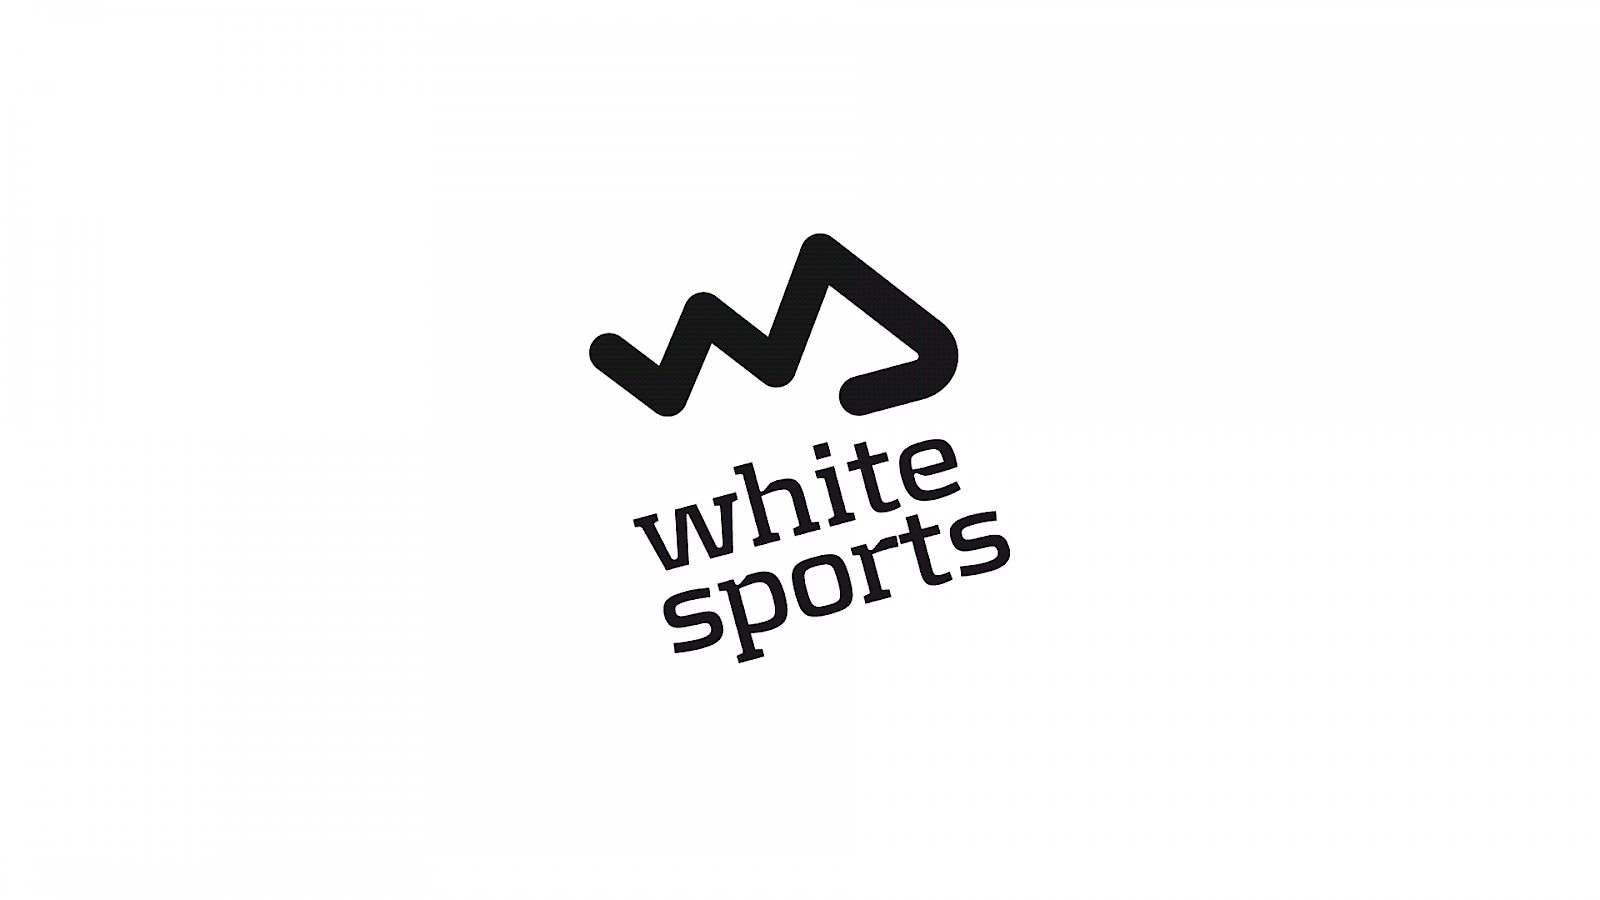 Logogestaltung white sports